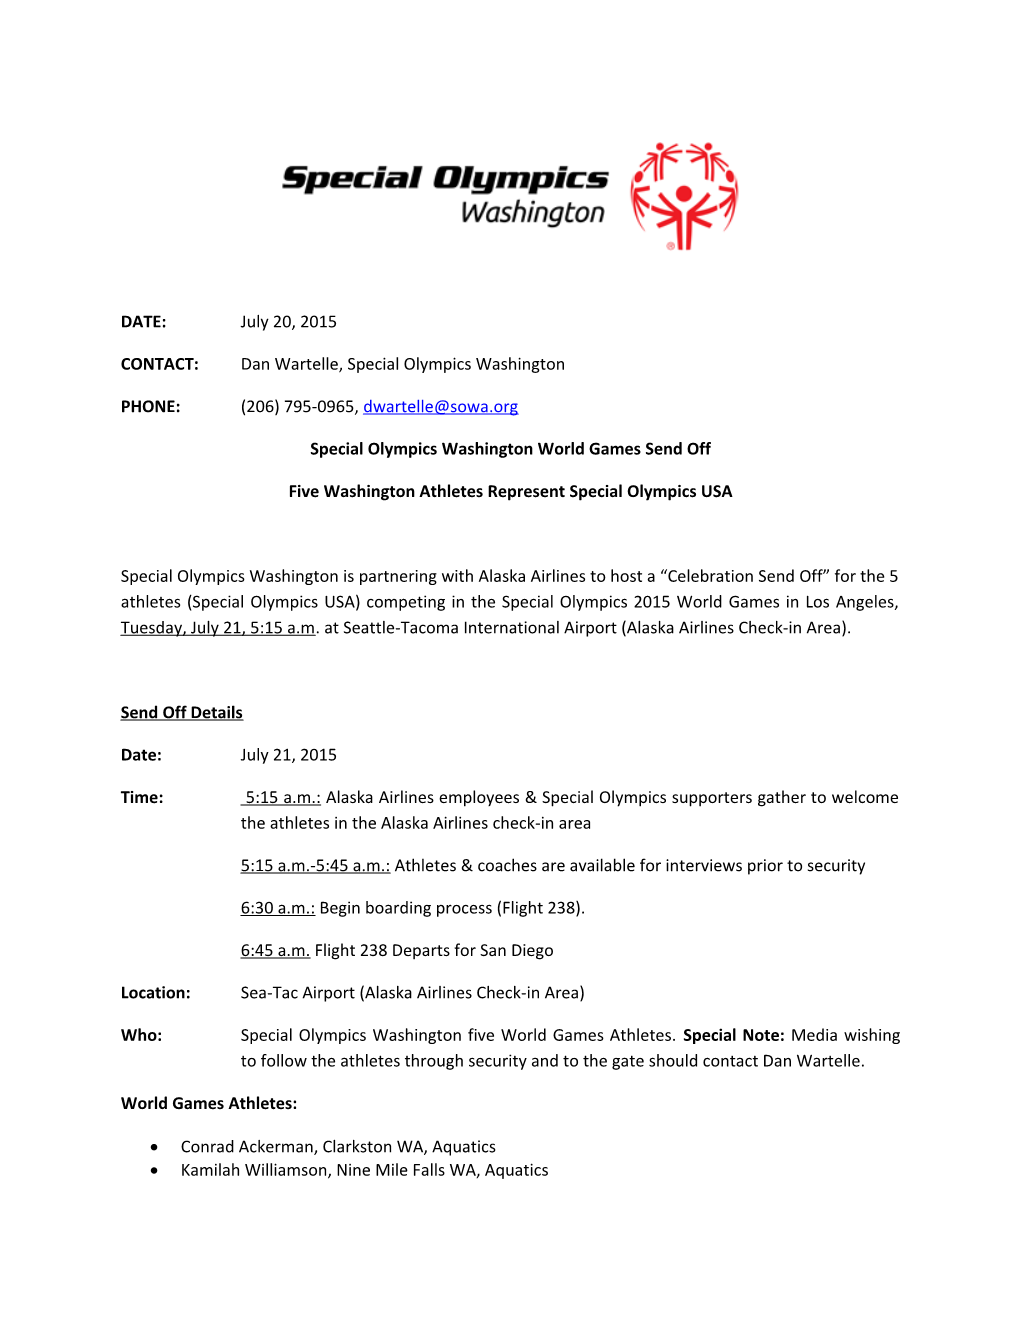 Special Olympics Washington World Games Send Off